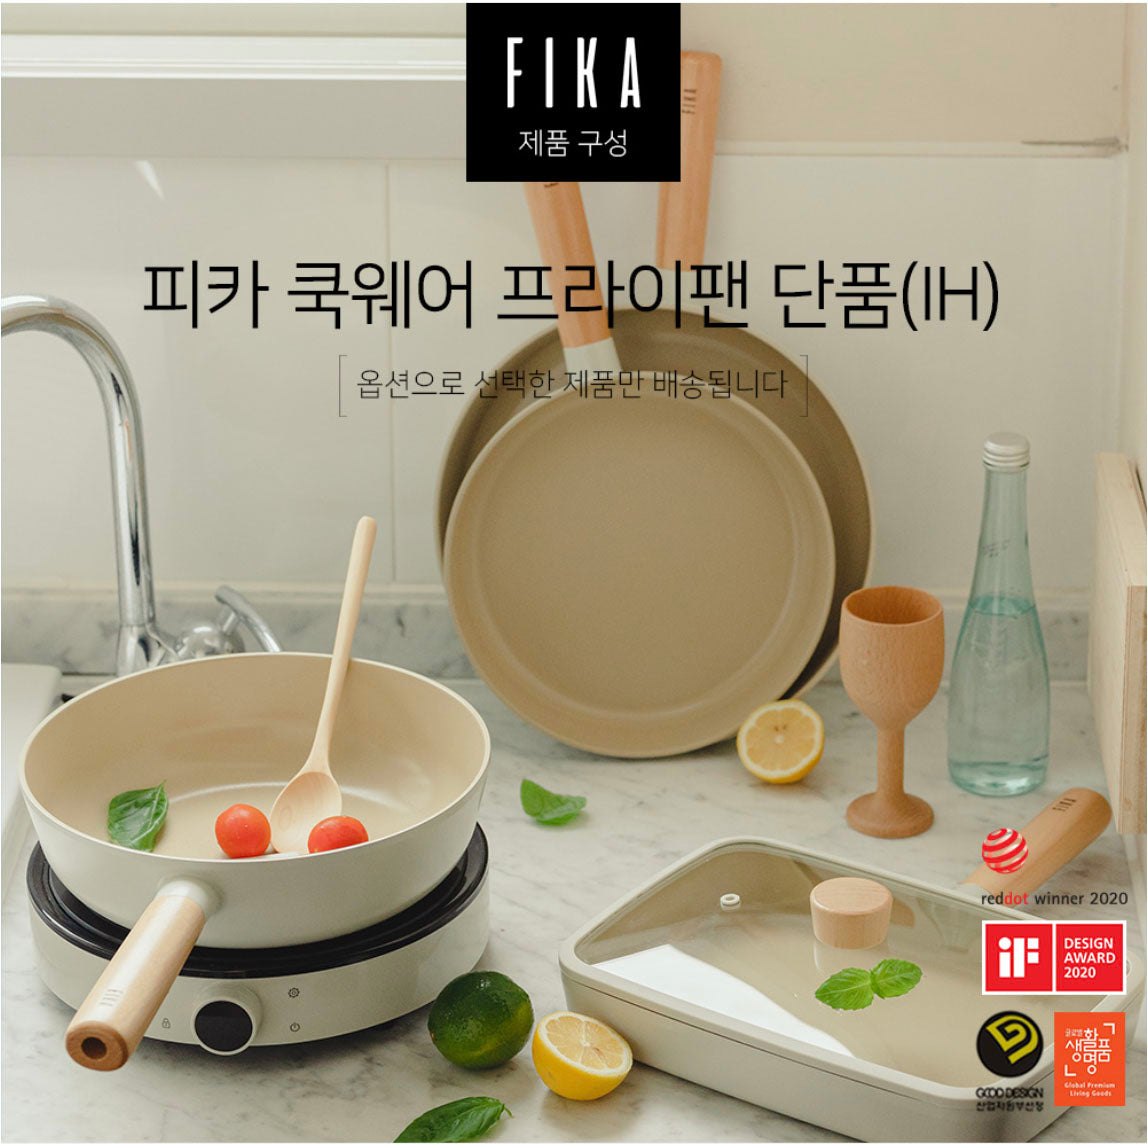 Fika Korean Ceramic Non-stick Pan Set Non-stick Pan Frying Pan